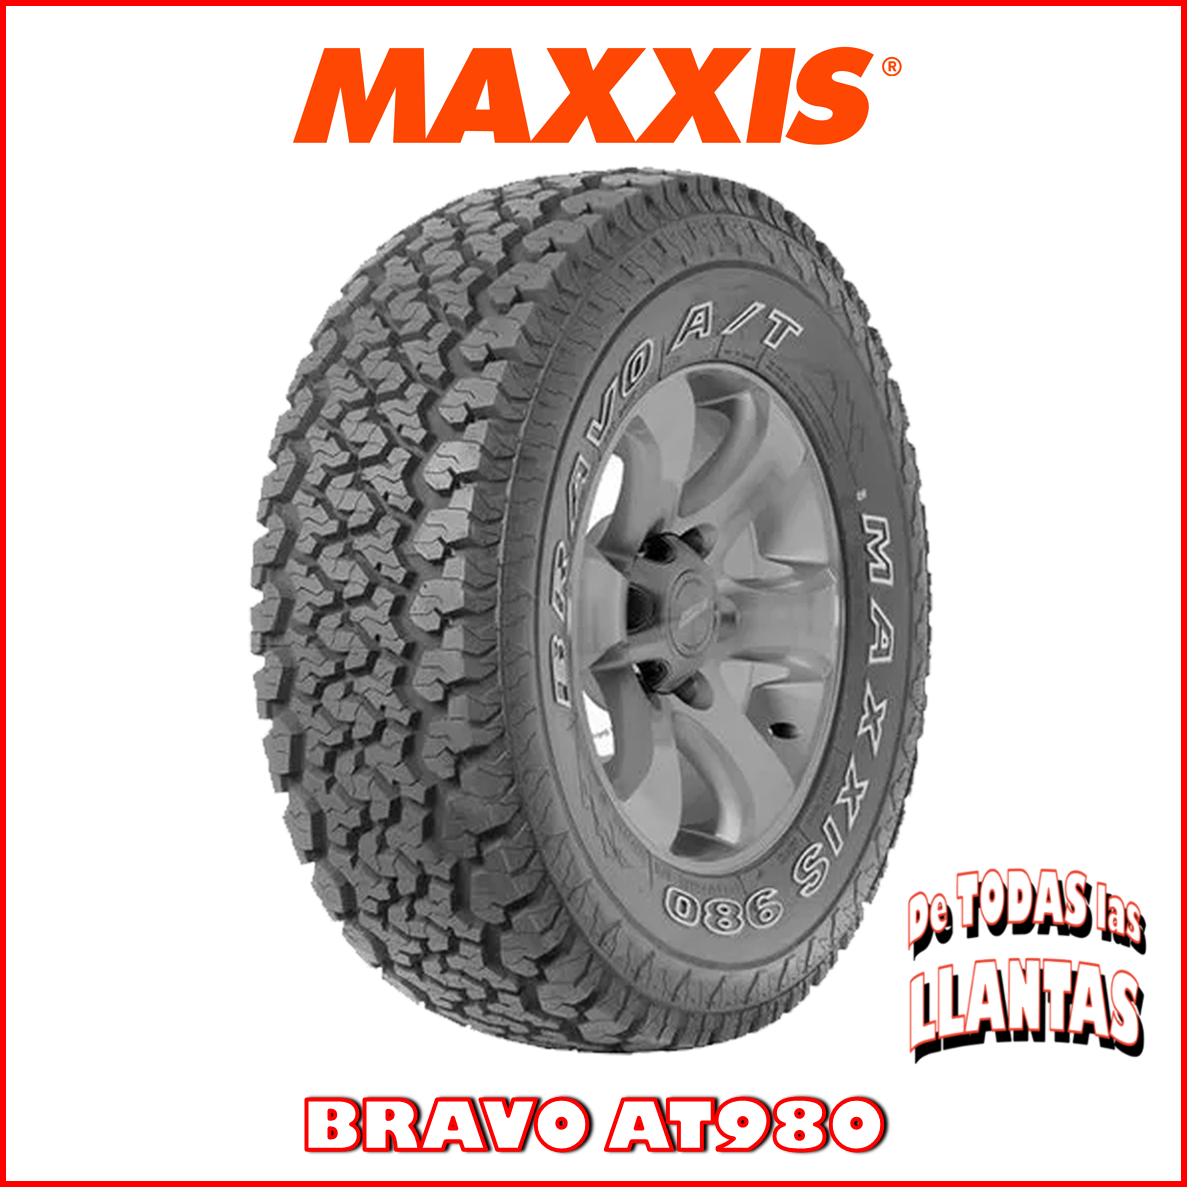 Llanta MAXXIS BRAVO AT980 - Rendimiento todoterreno LT 27X850R14.